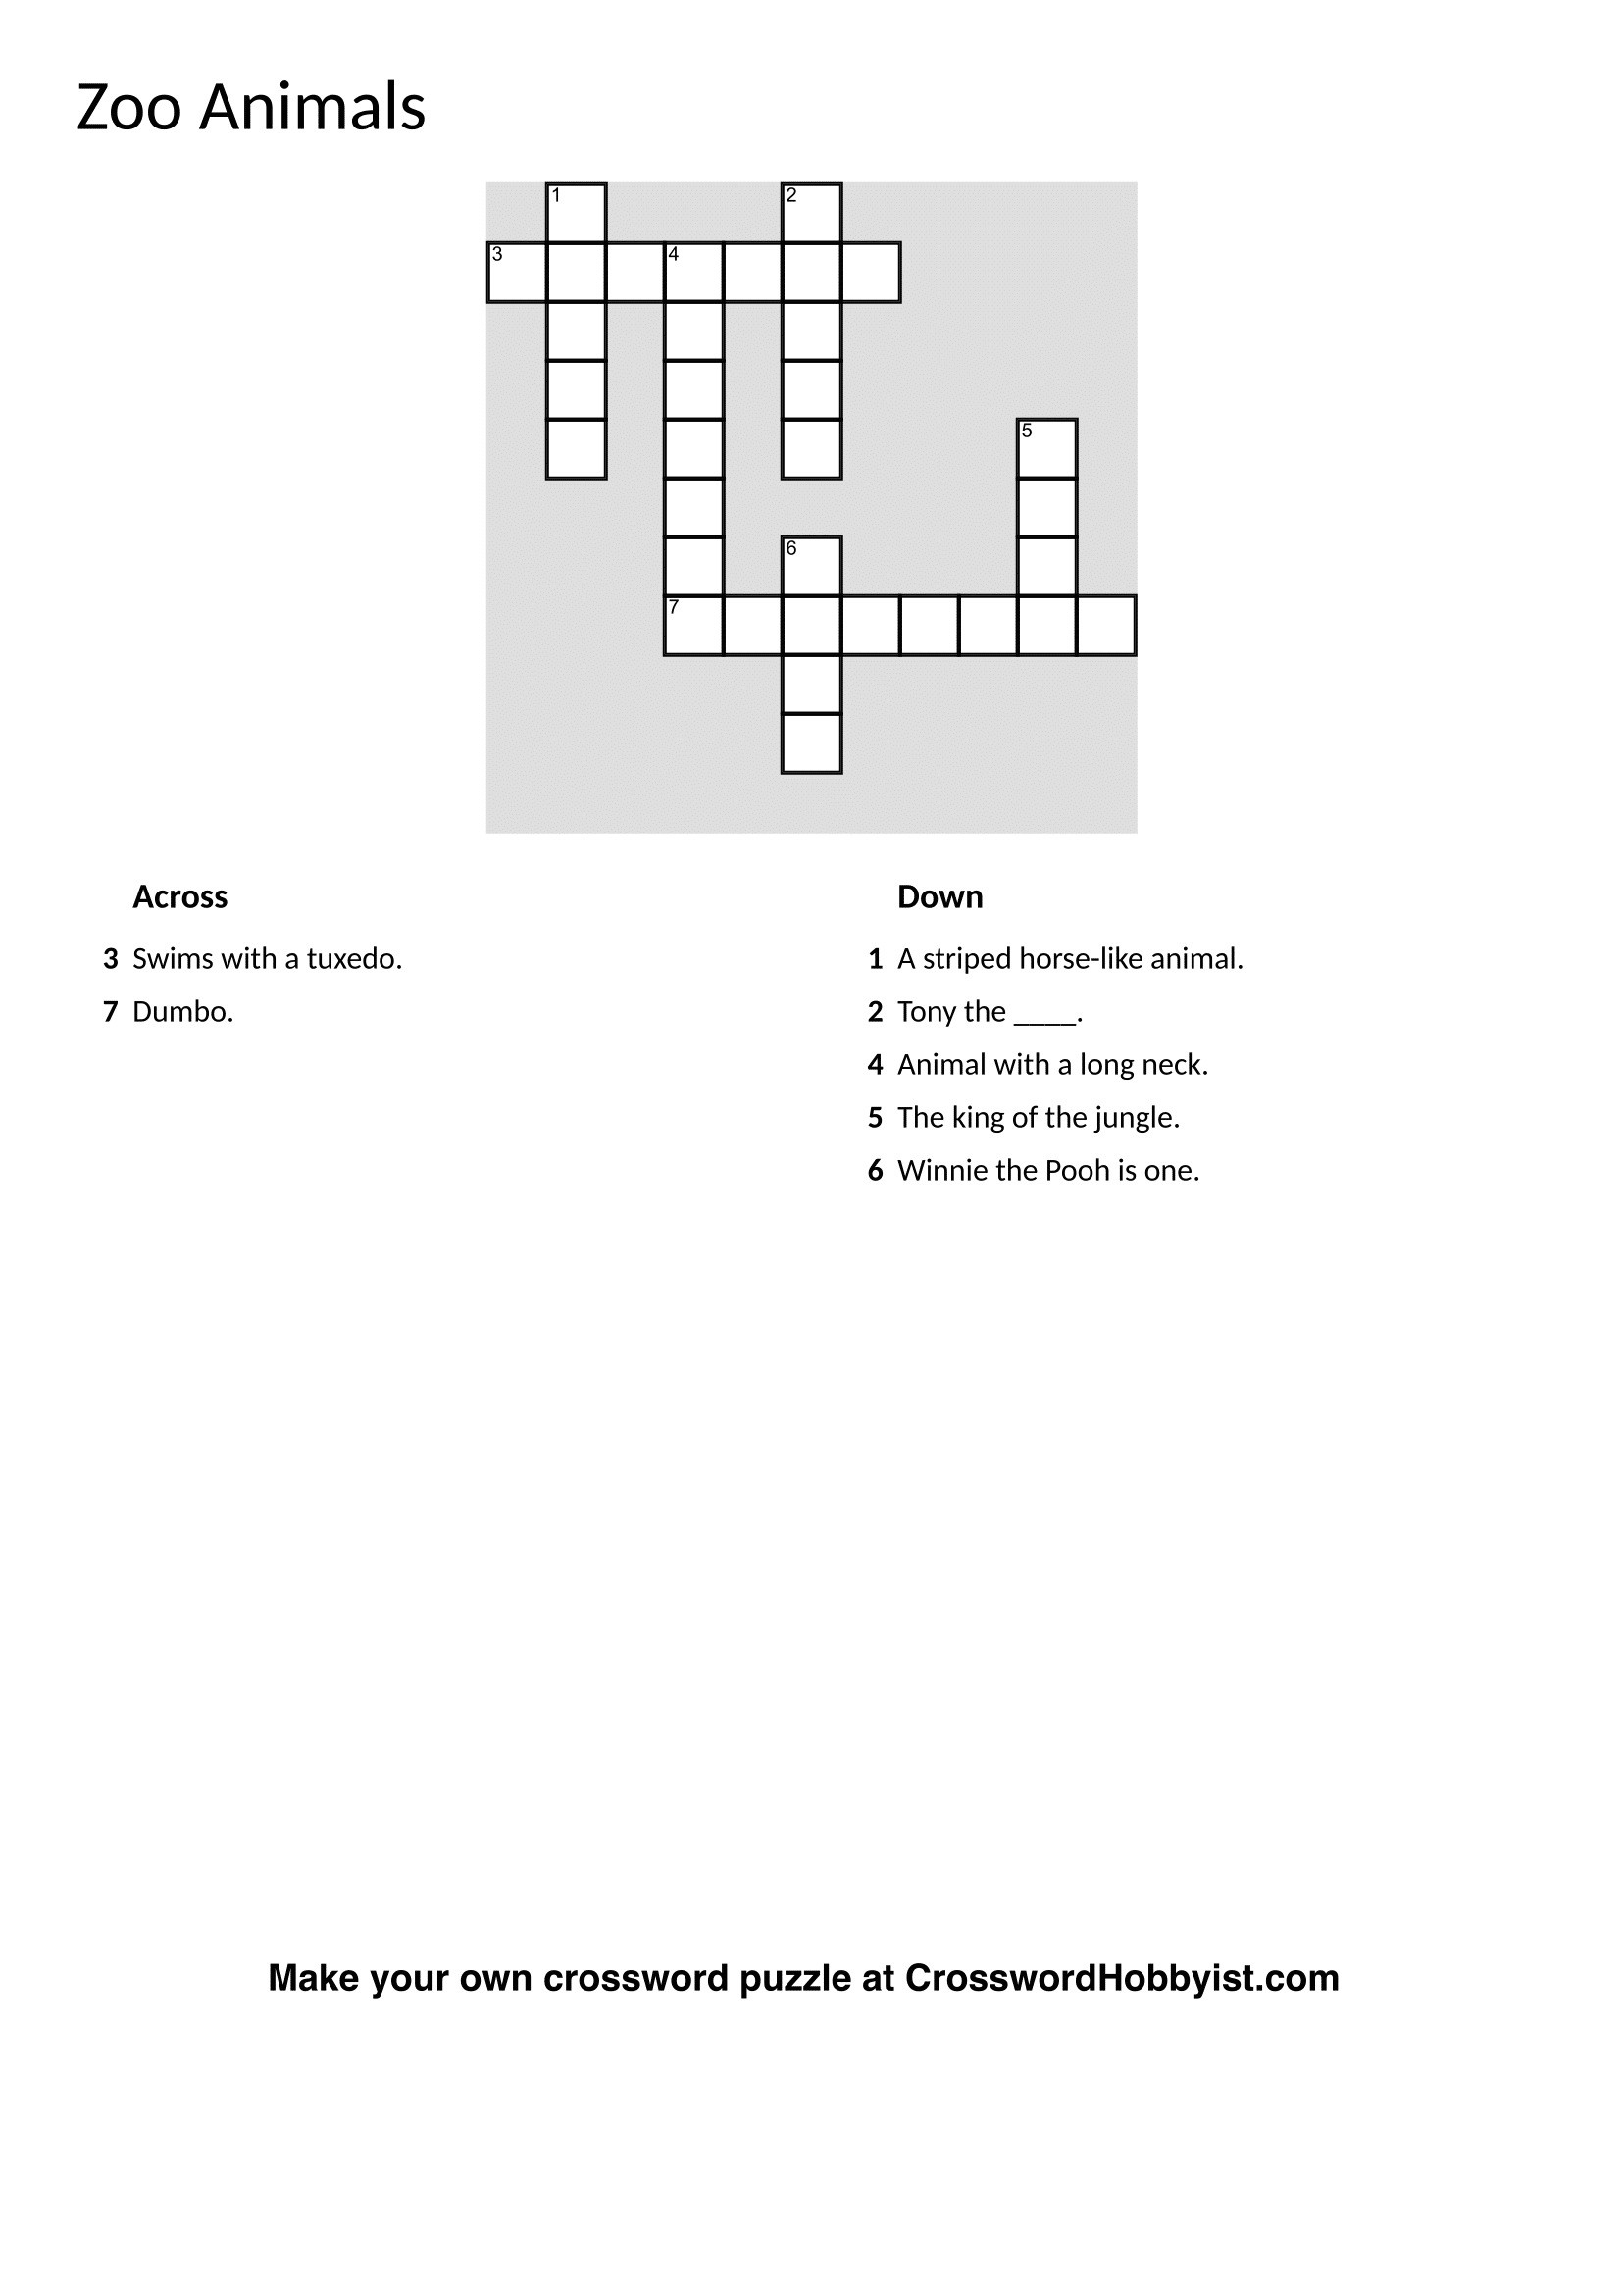 Crossword Puzzle Maker Online Free Printable Crosswords Jigsaw - Jigsaw Puzzle Maker Free Online Printable